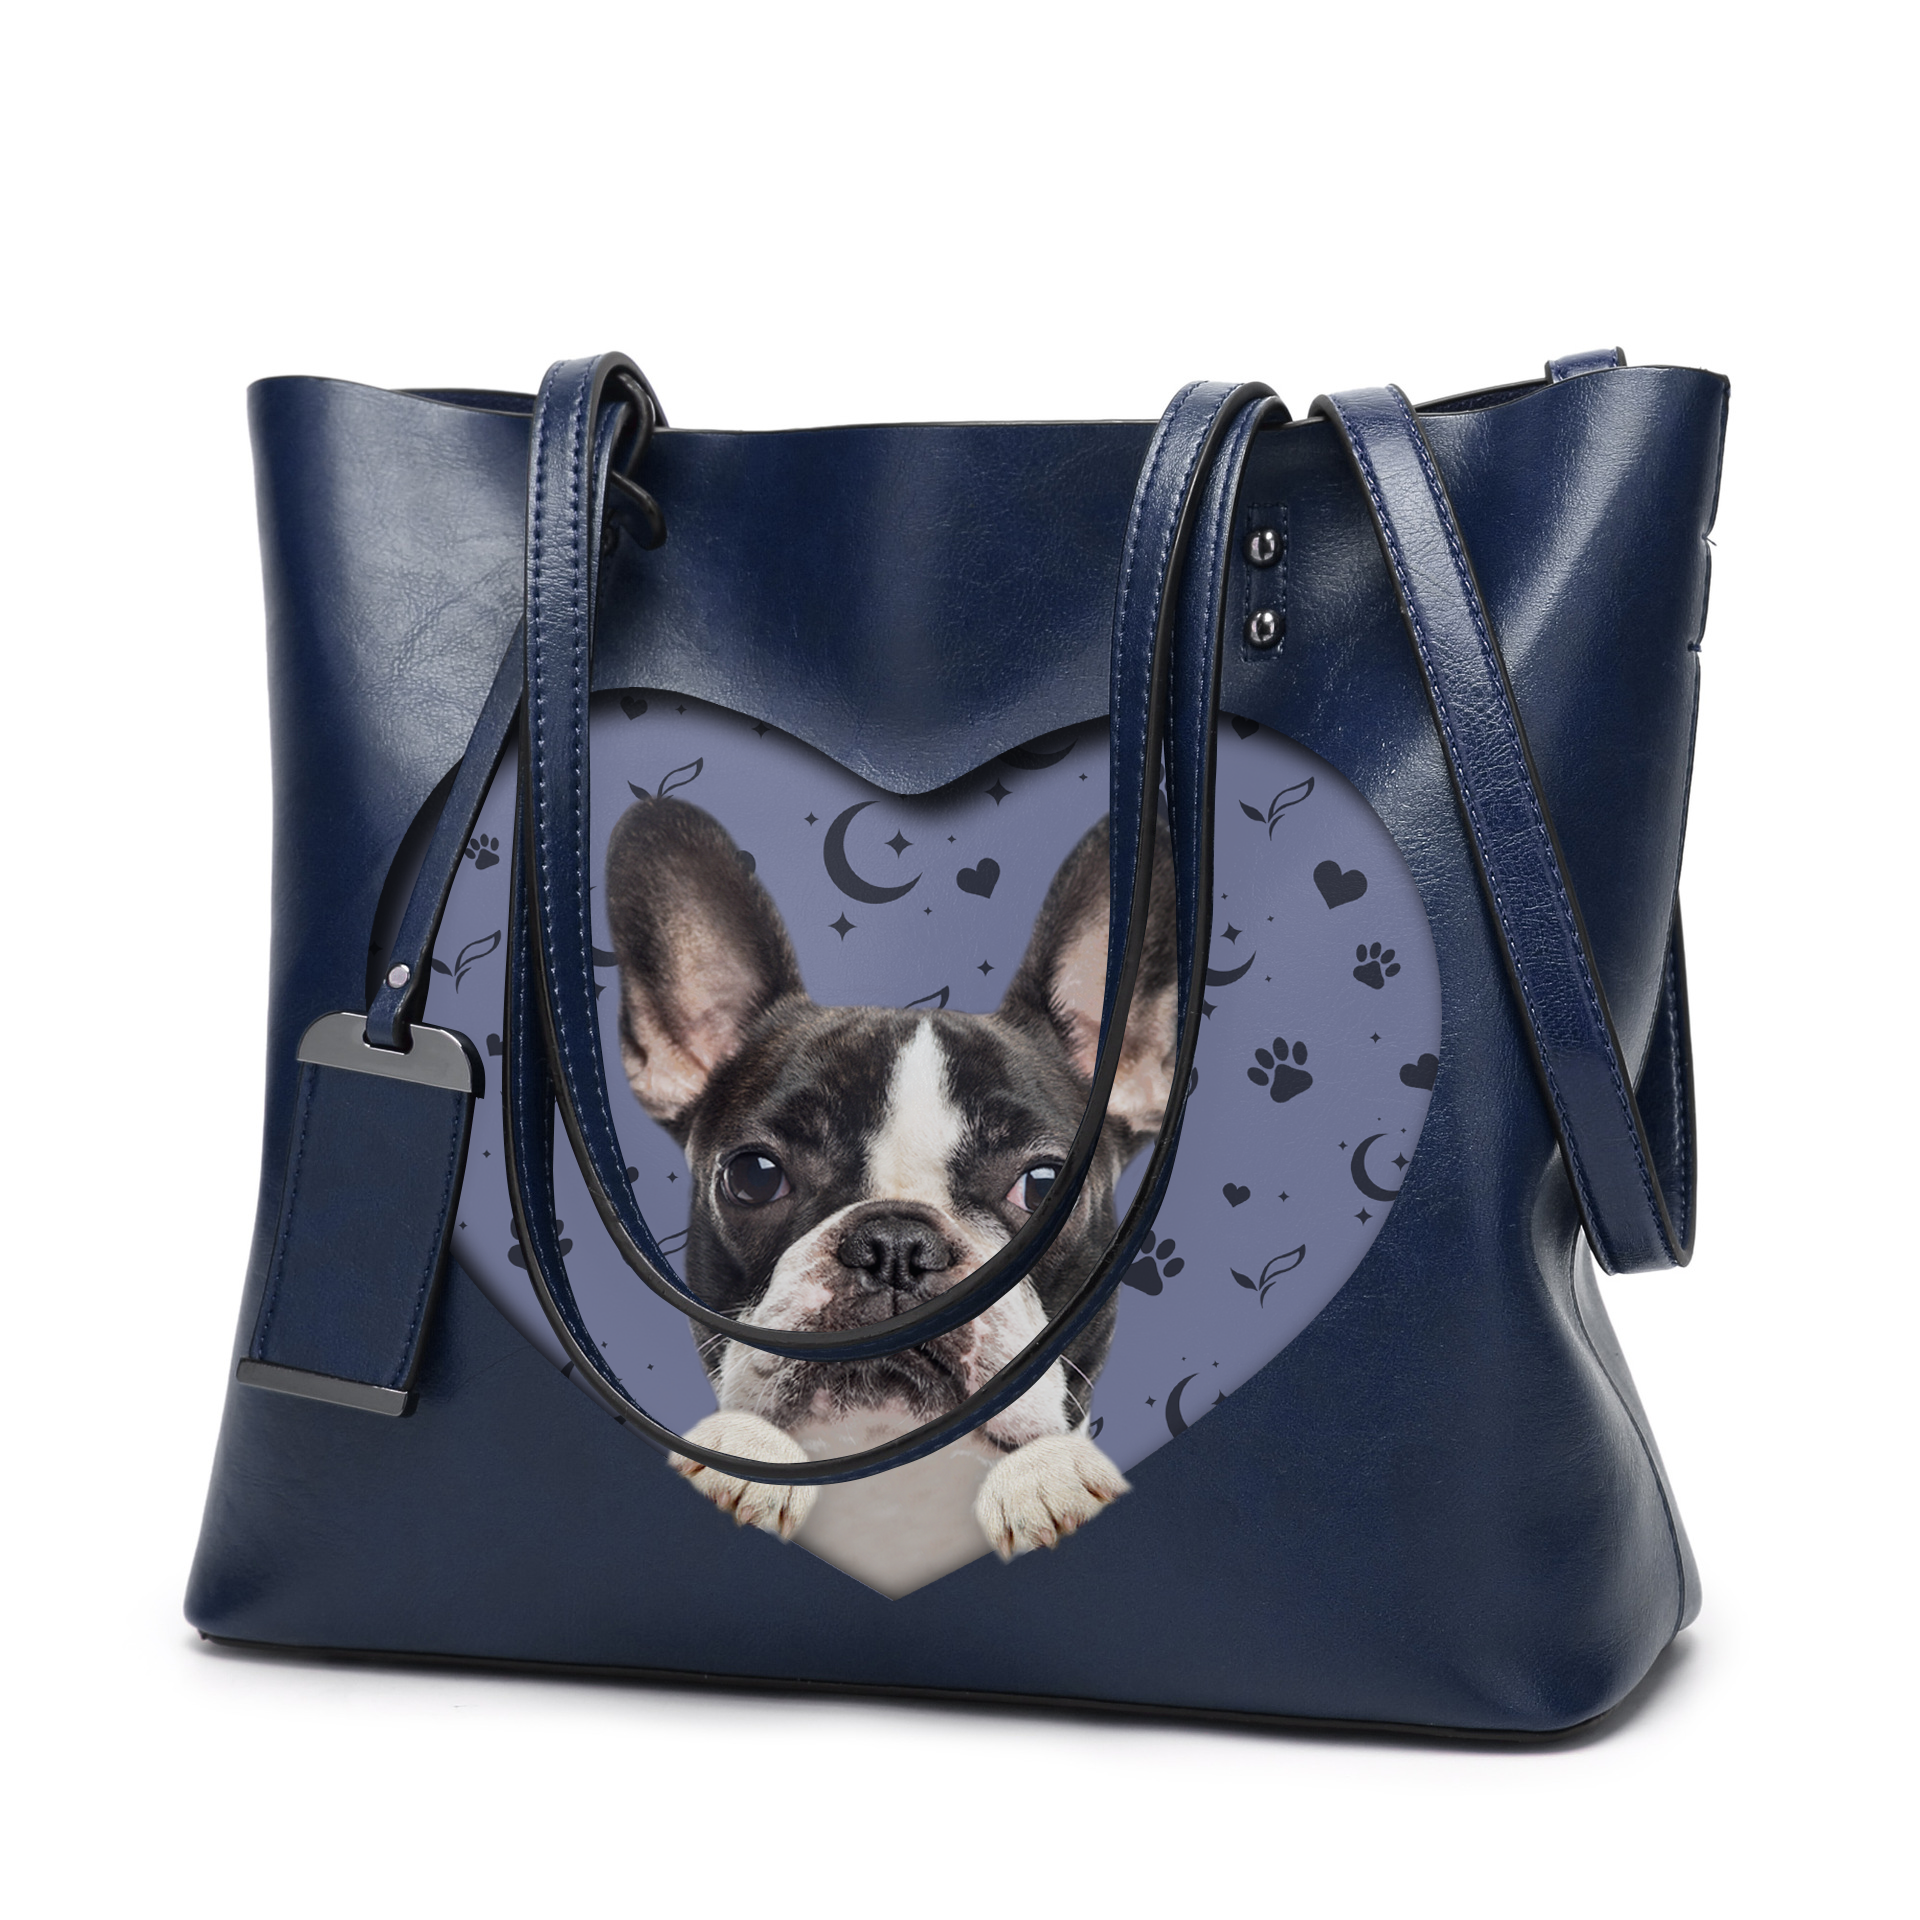 I Know I'm Cute - French Bulldog Glamour Handbag V3 - 11